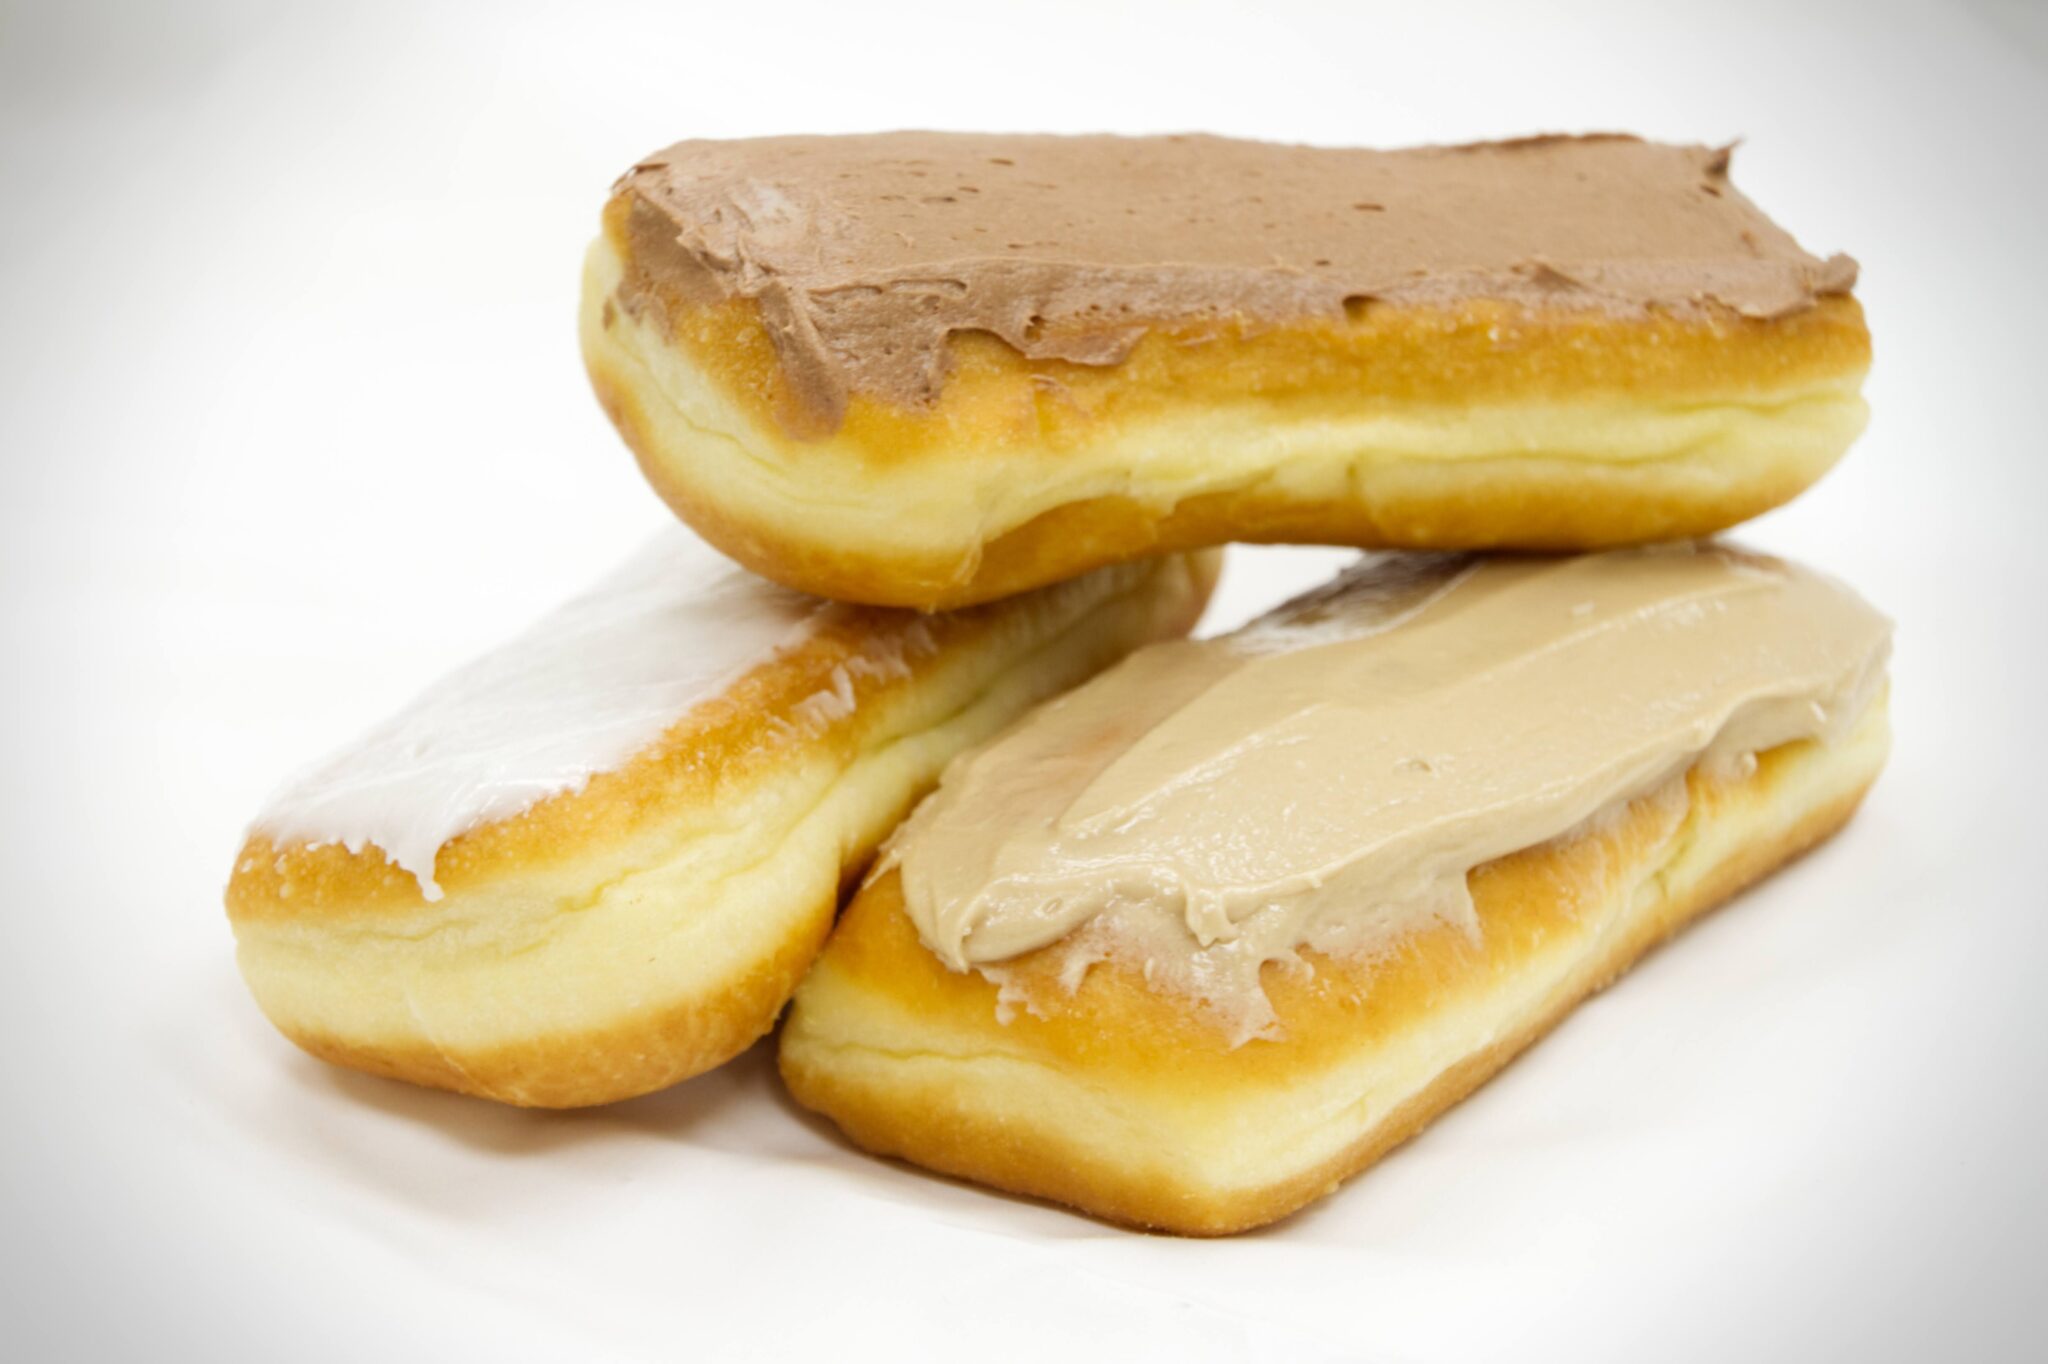 Unfilled Long John Donuts  Dobo's Delights Bakery - Piqua, OH 45356  (937.773.7923)